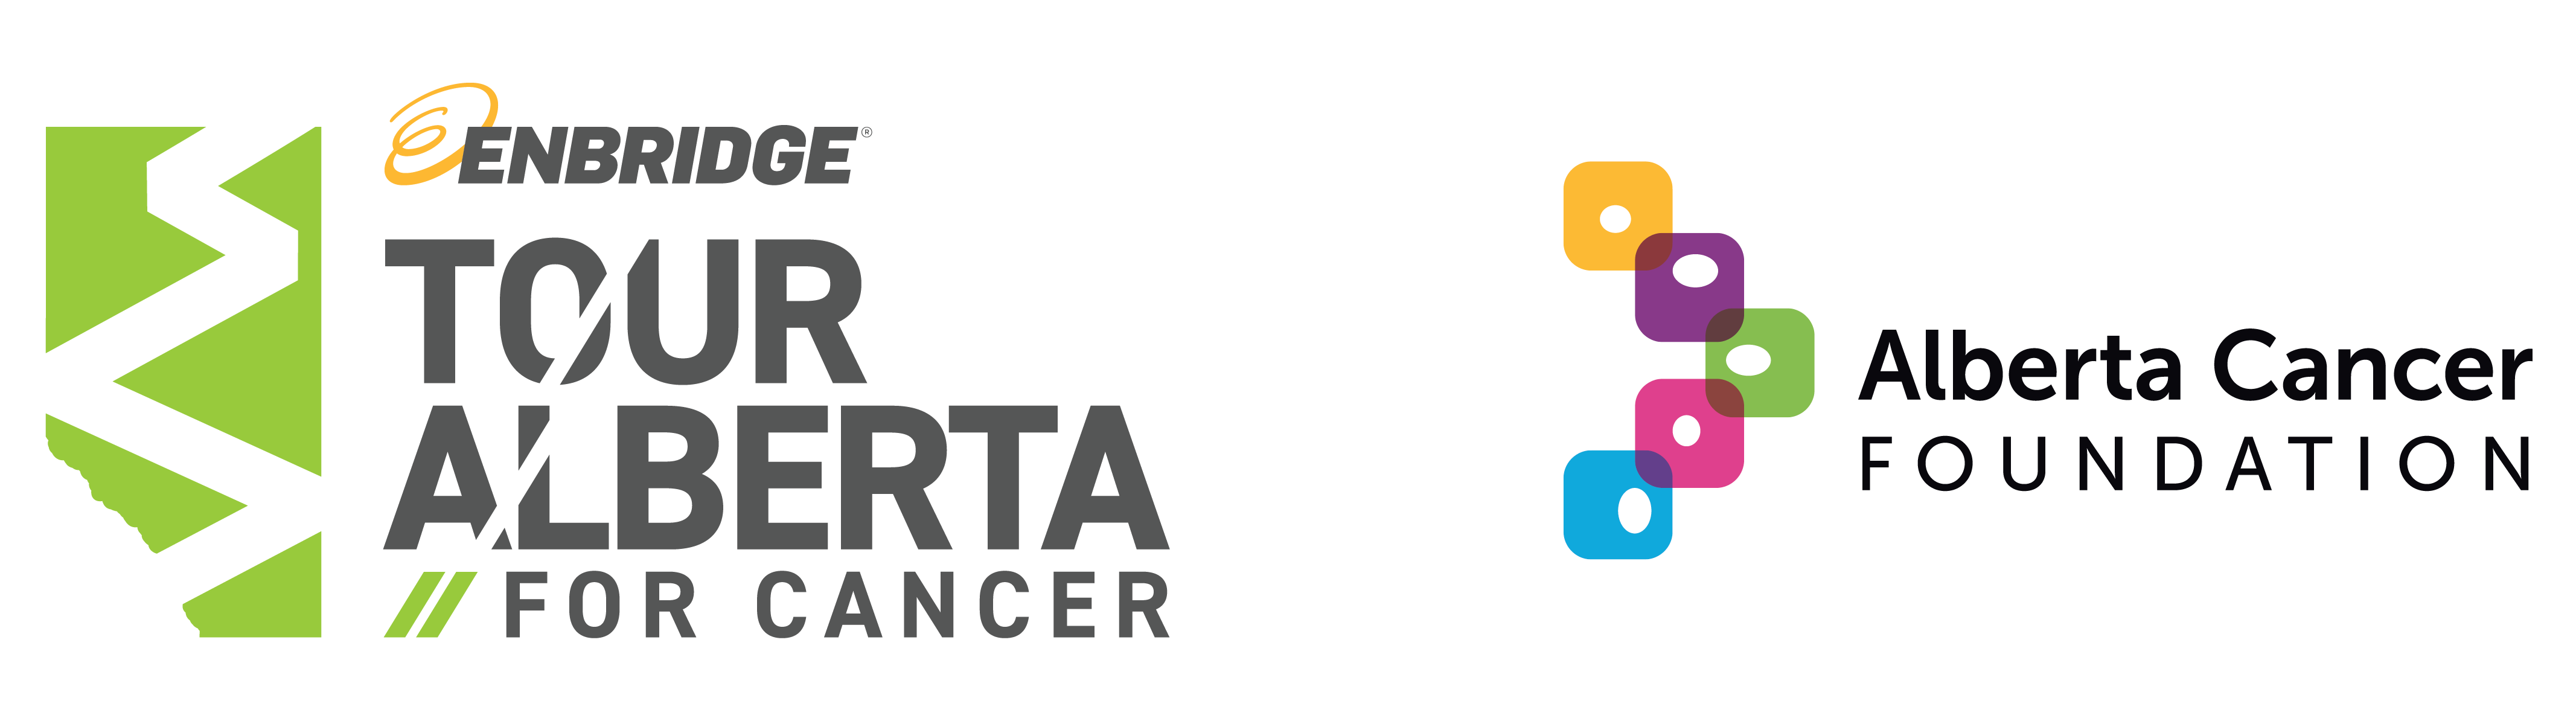 Tour Alberta for Cancer